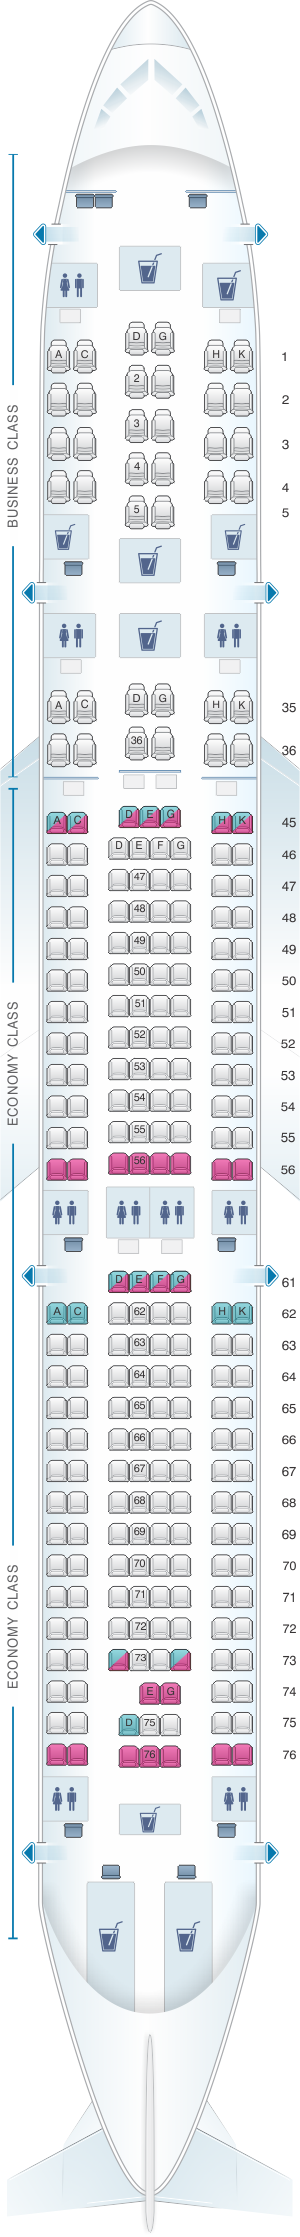 Plan de cabine South African Airways Airbus A340 300 | SeatMaestro.fr